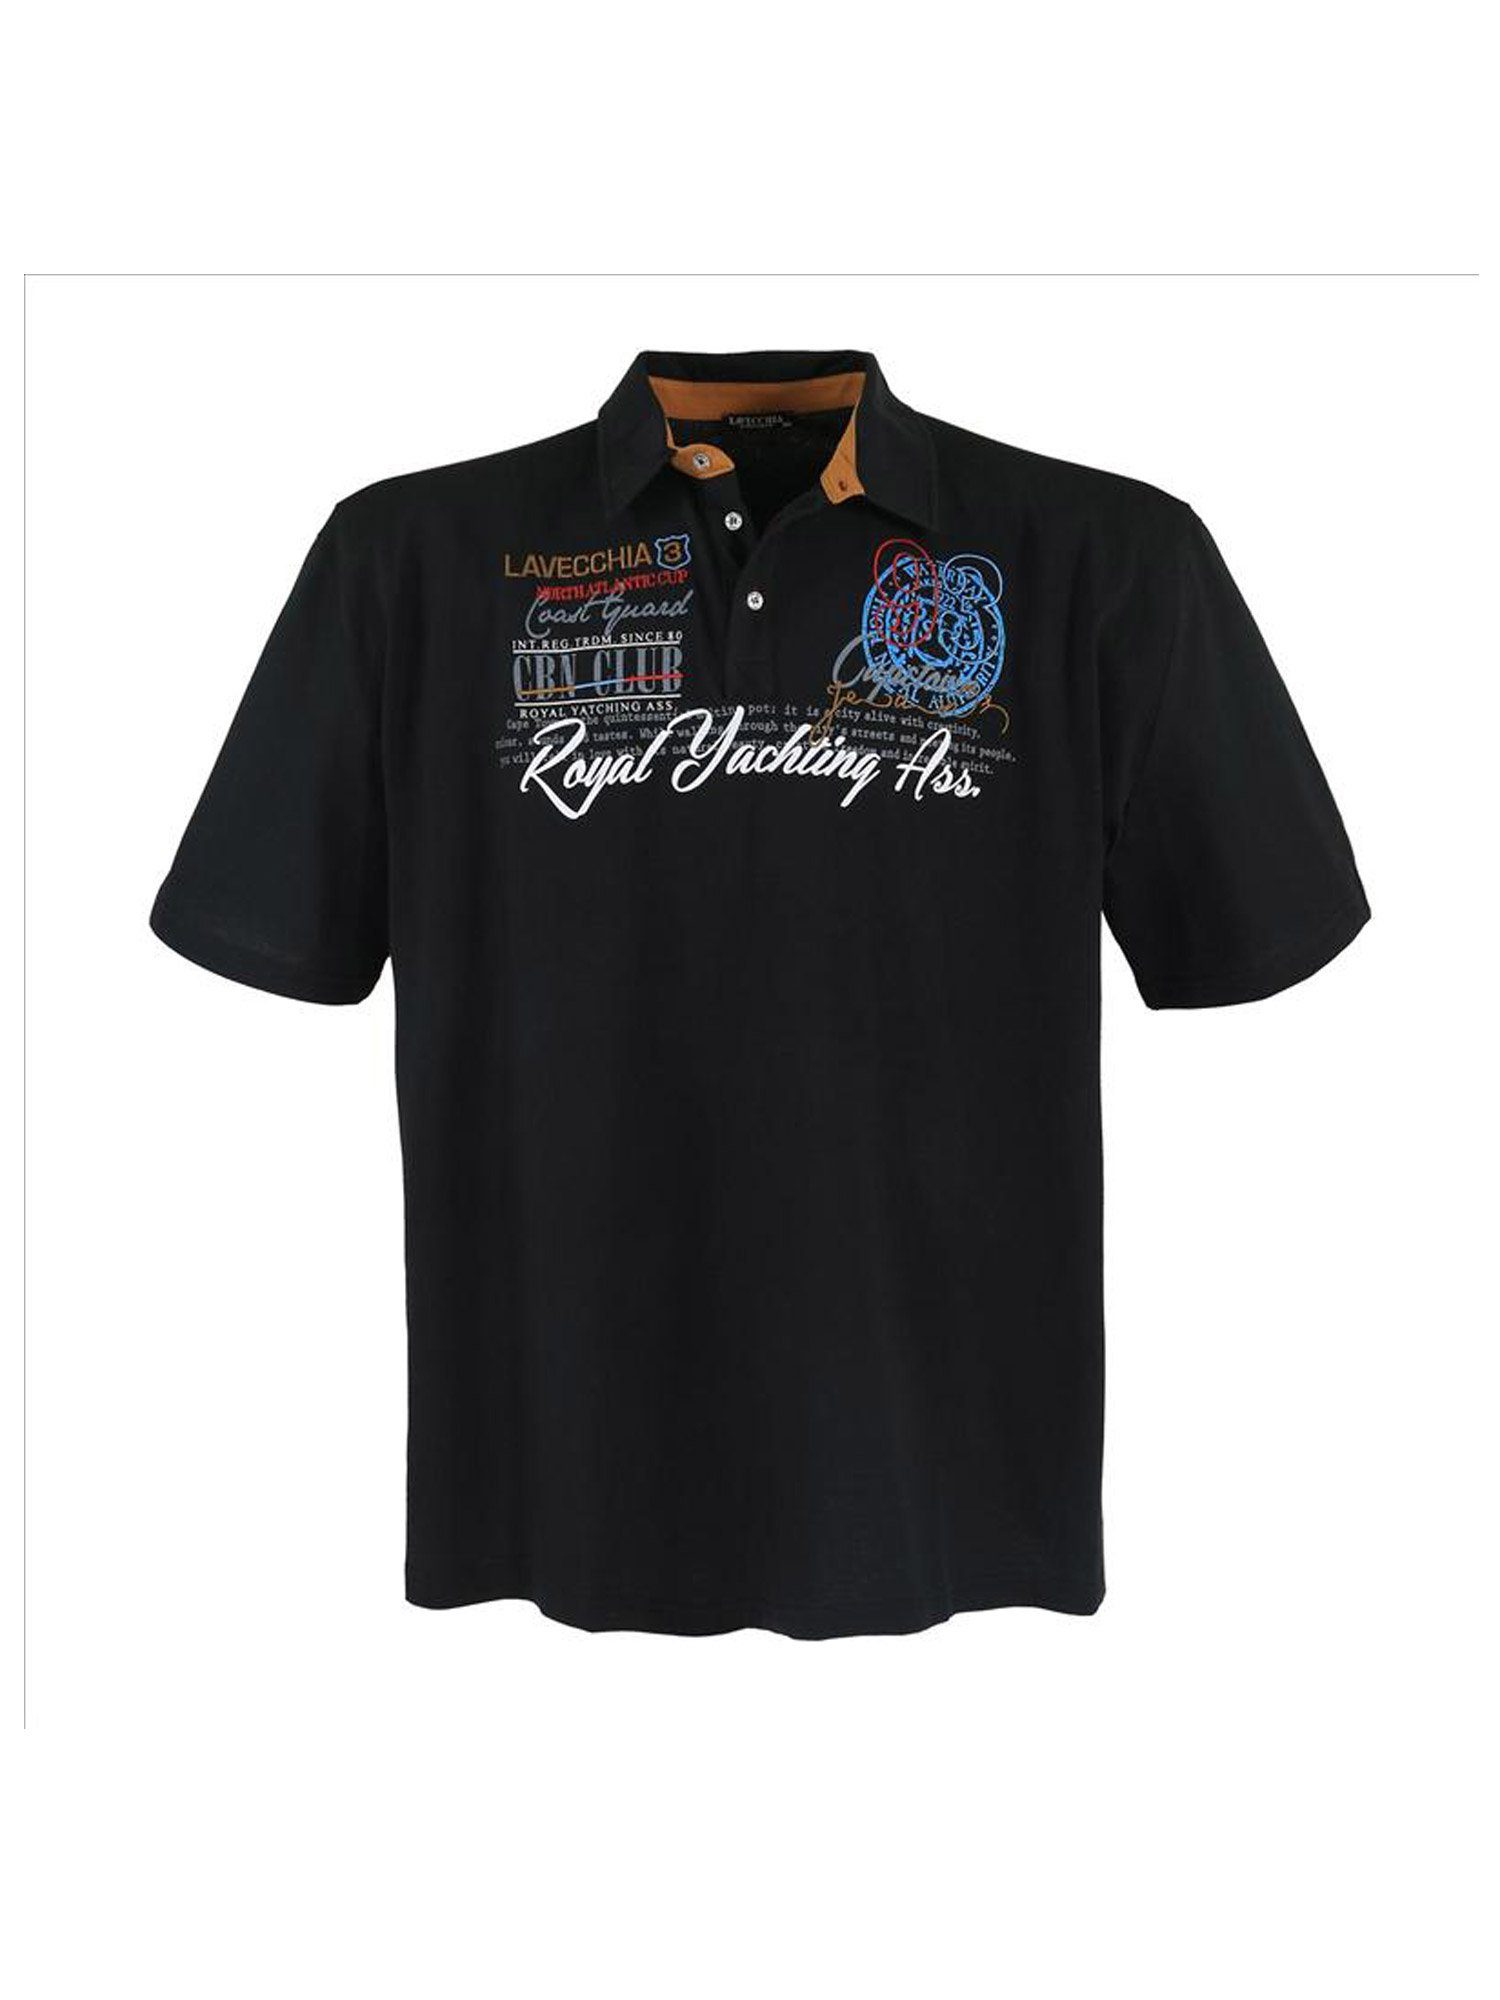 Lavecchia Poloshirt Übergrößen Herren schwarz Polo Shirt Polo Herren Shirt LV-4688